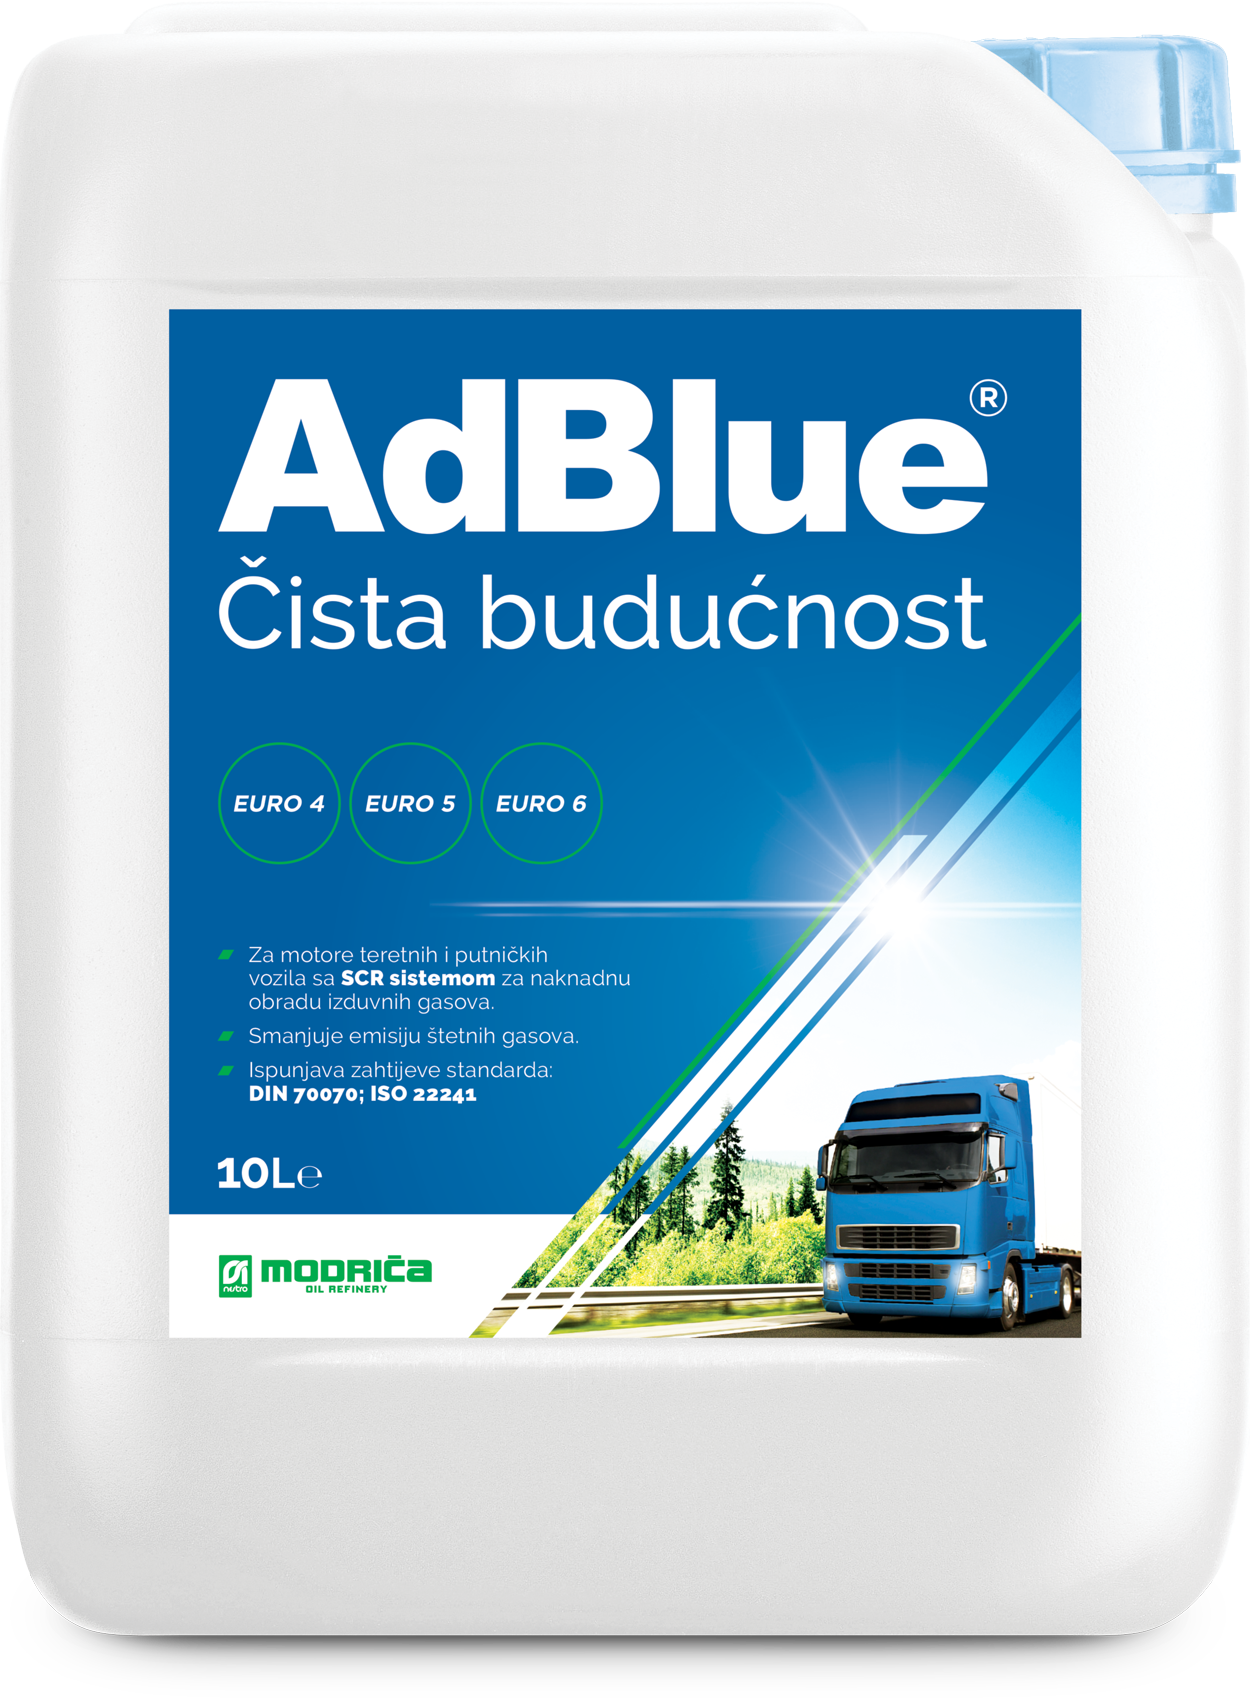 AD BLUE - Модрича